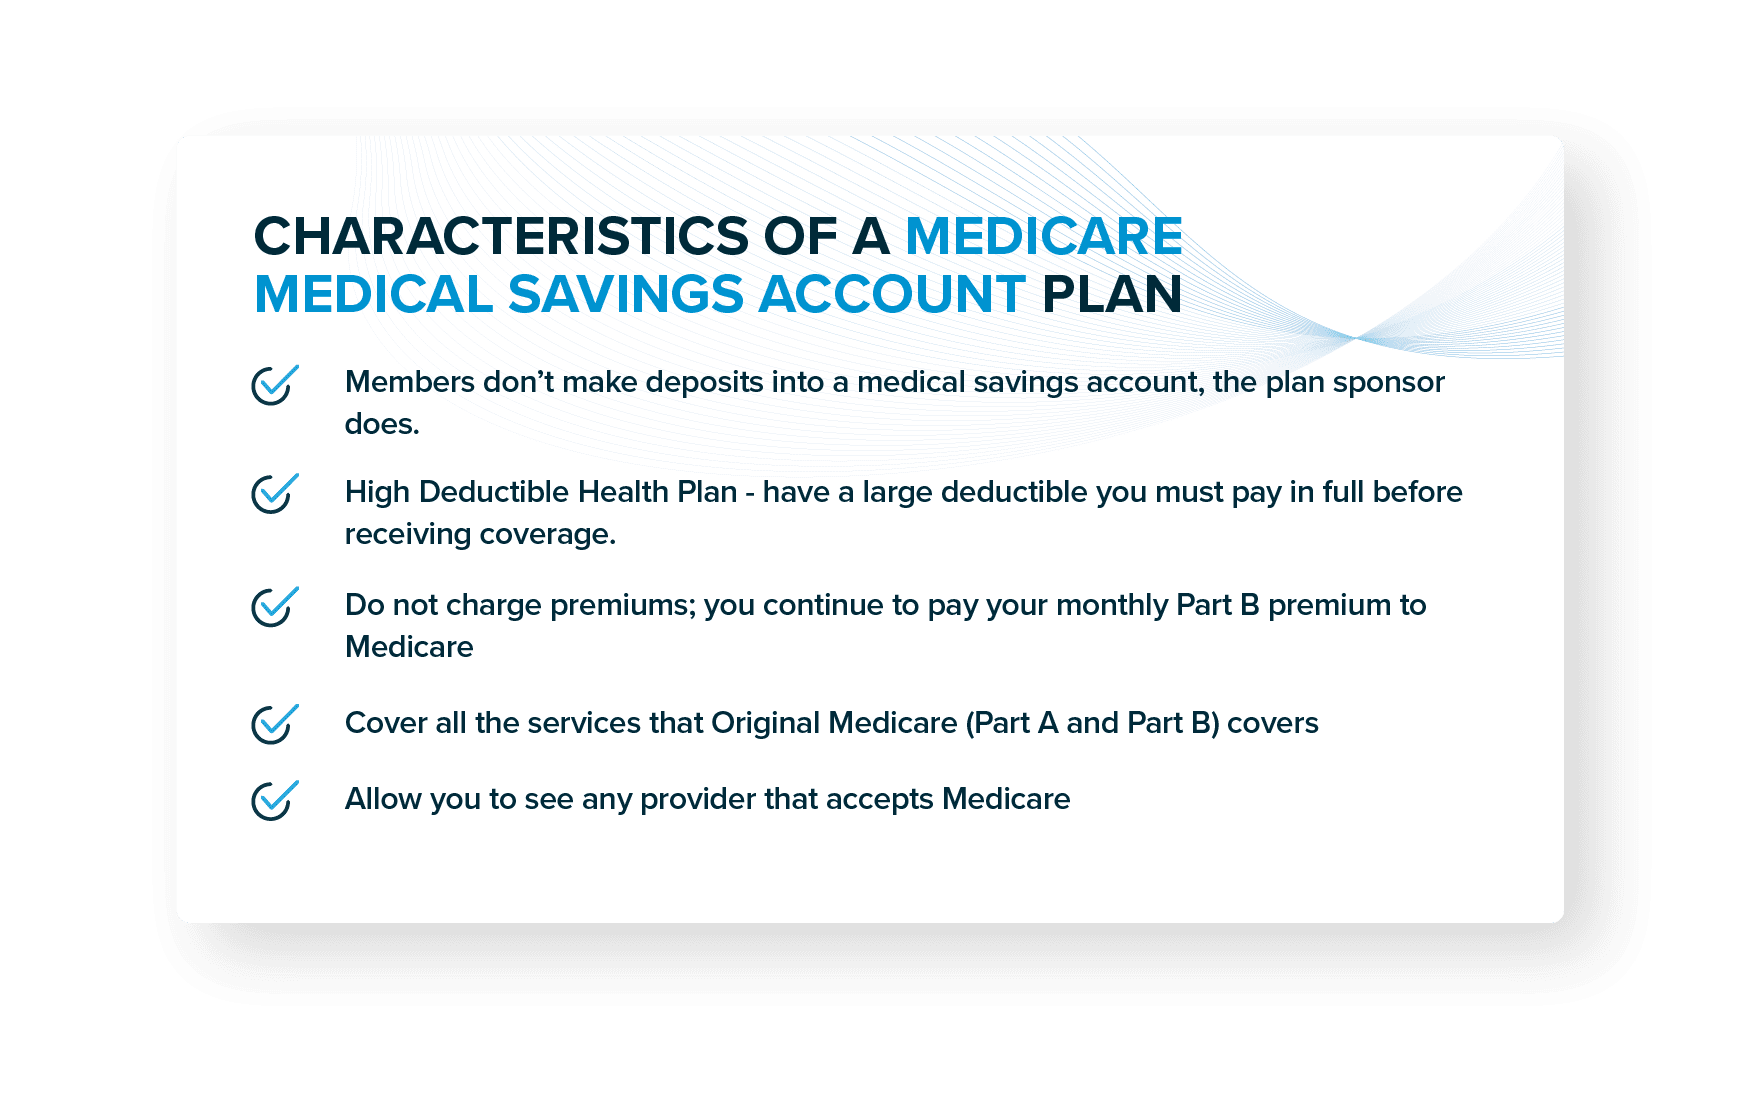 Characteristics of a Medicare Medical Savings Account Plan